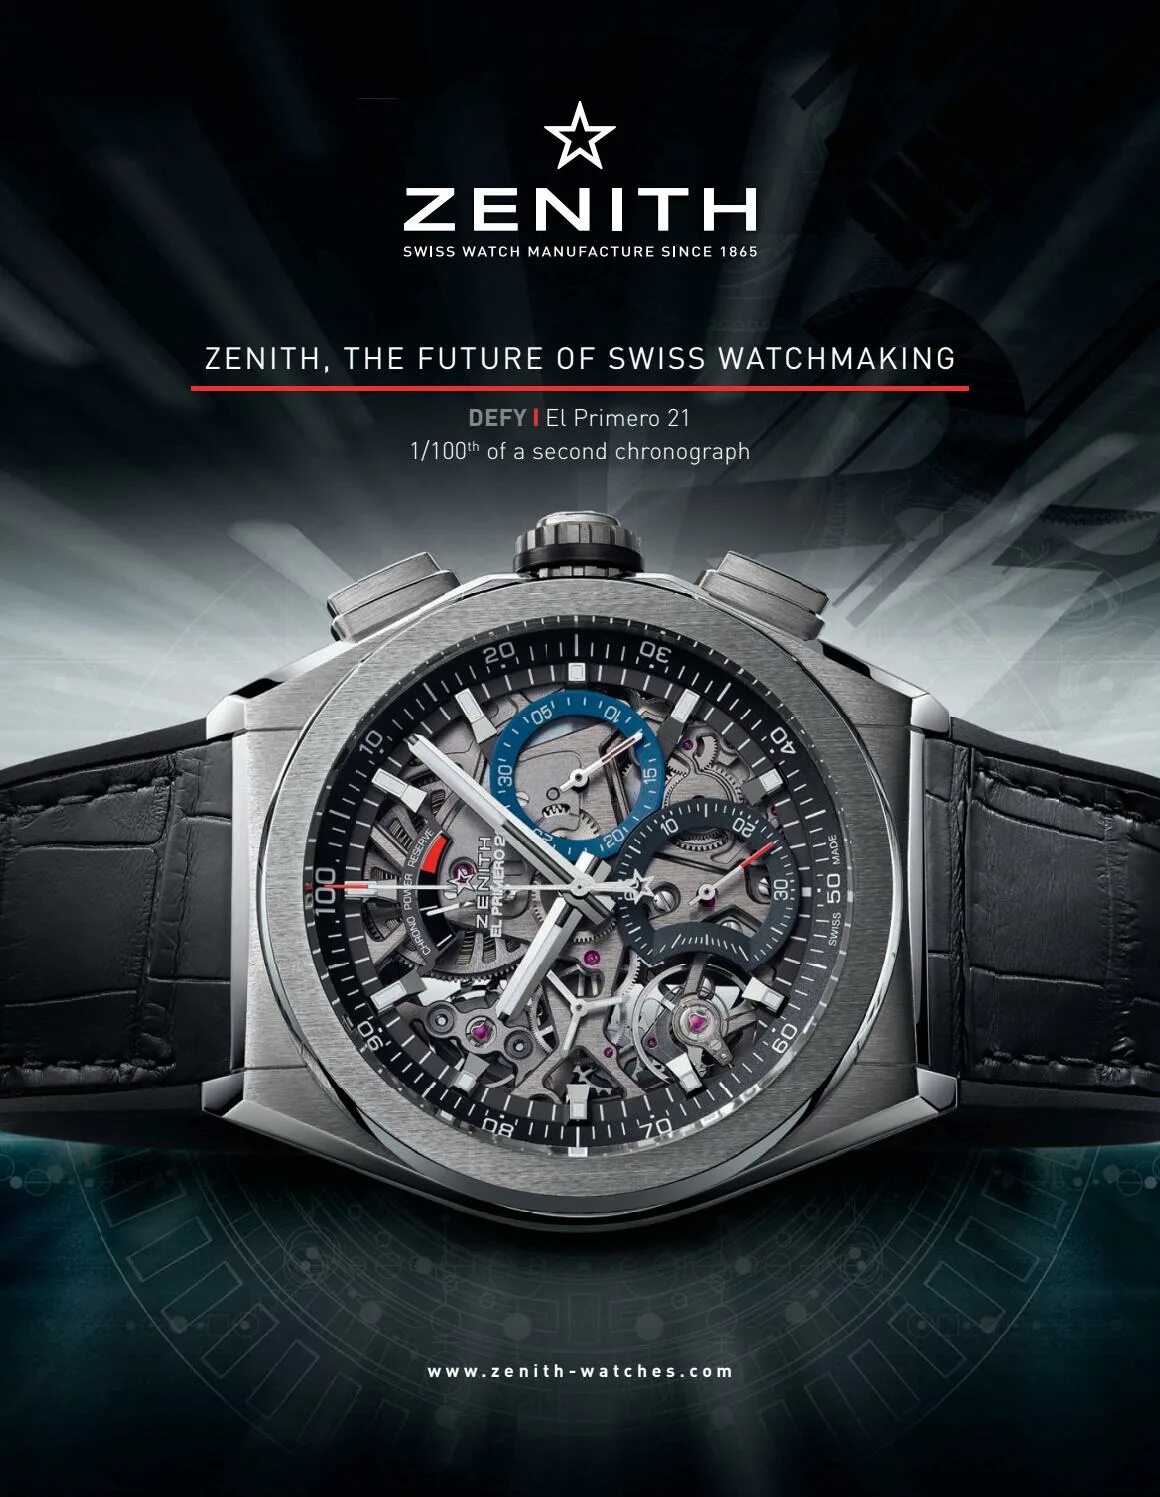 Zenith Swiss watch manufacture since 1865. Zenith часы реклама. Часы реклама Зенит. Швейцарские часы Zenith реклама. Www best watch